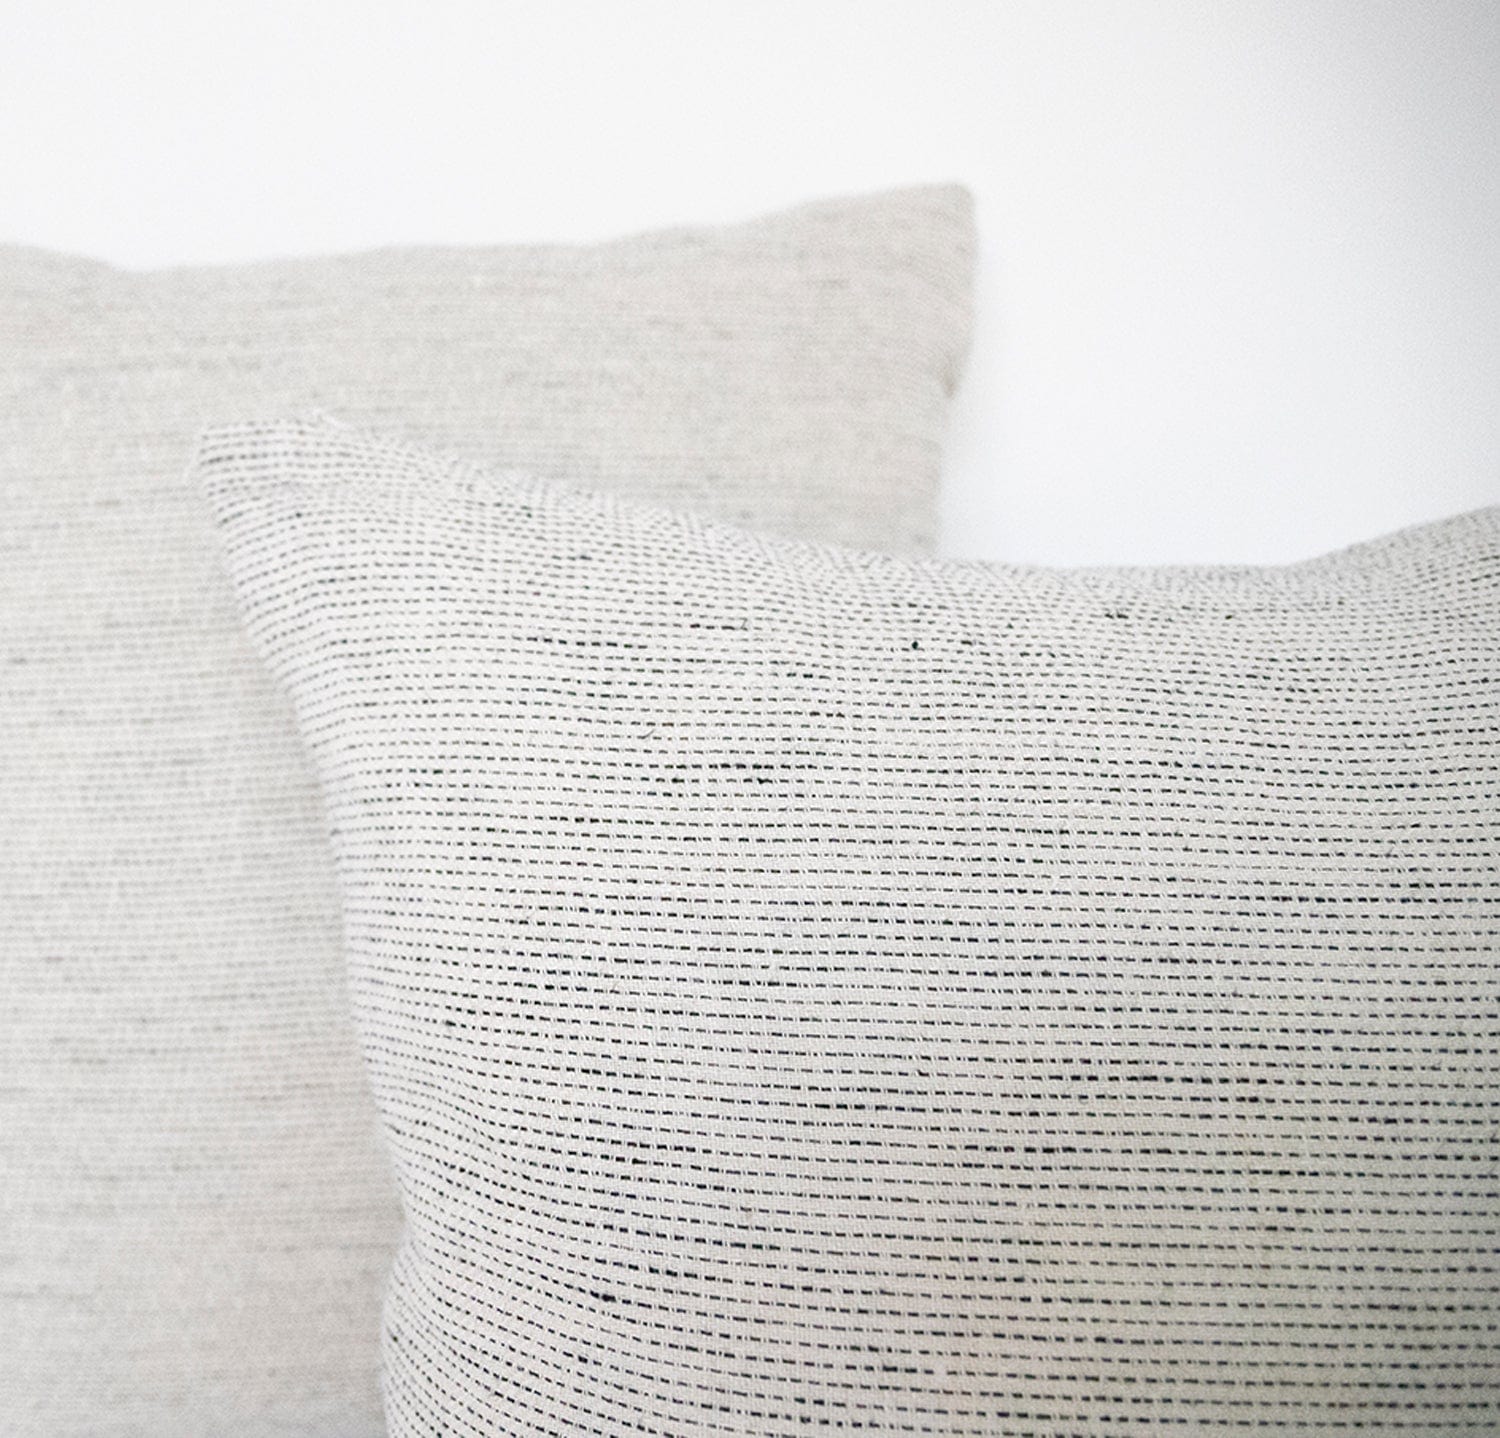 Rough Linen | 24 St. Barts Linen Square Throw Pillow Cover | Moss